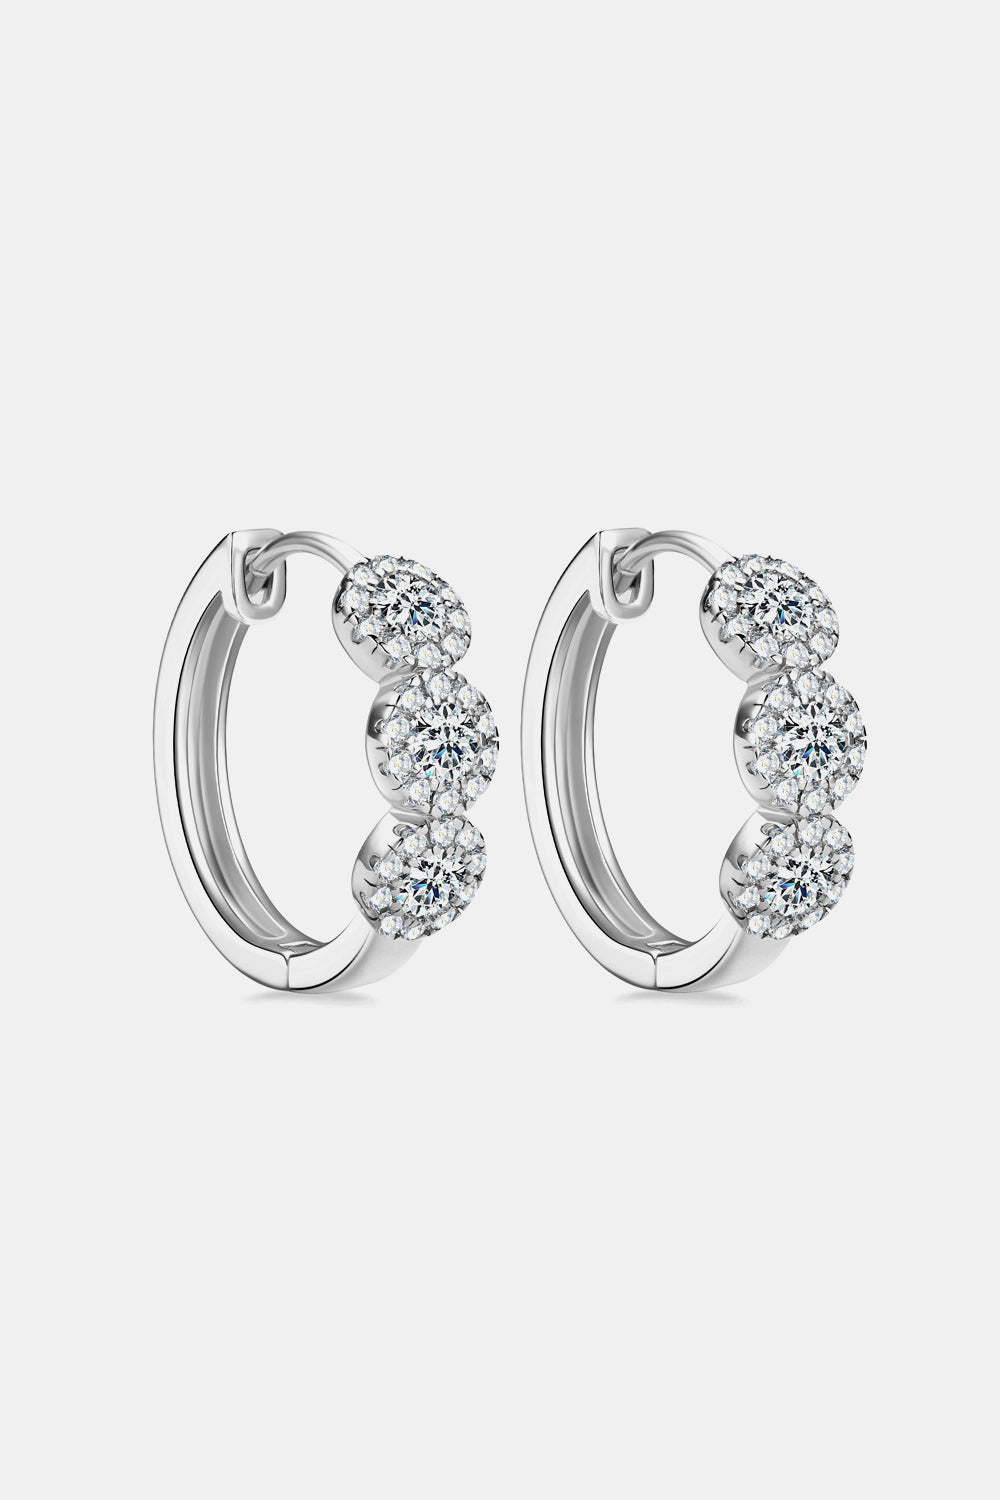 Moissanite 925 Sterling Silver Huggie Earrings-Earrings-Inspired by Justeen-Women's Clothing Boutique